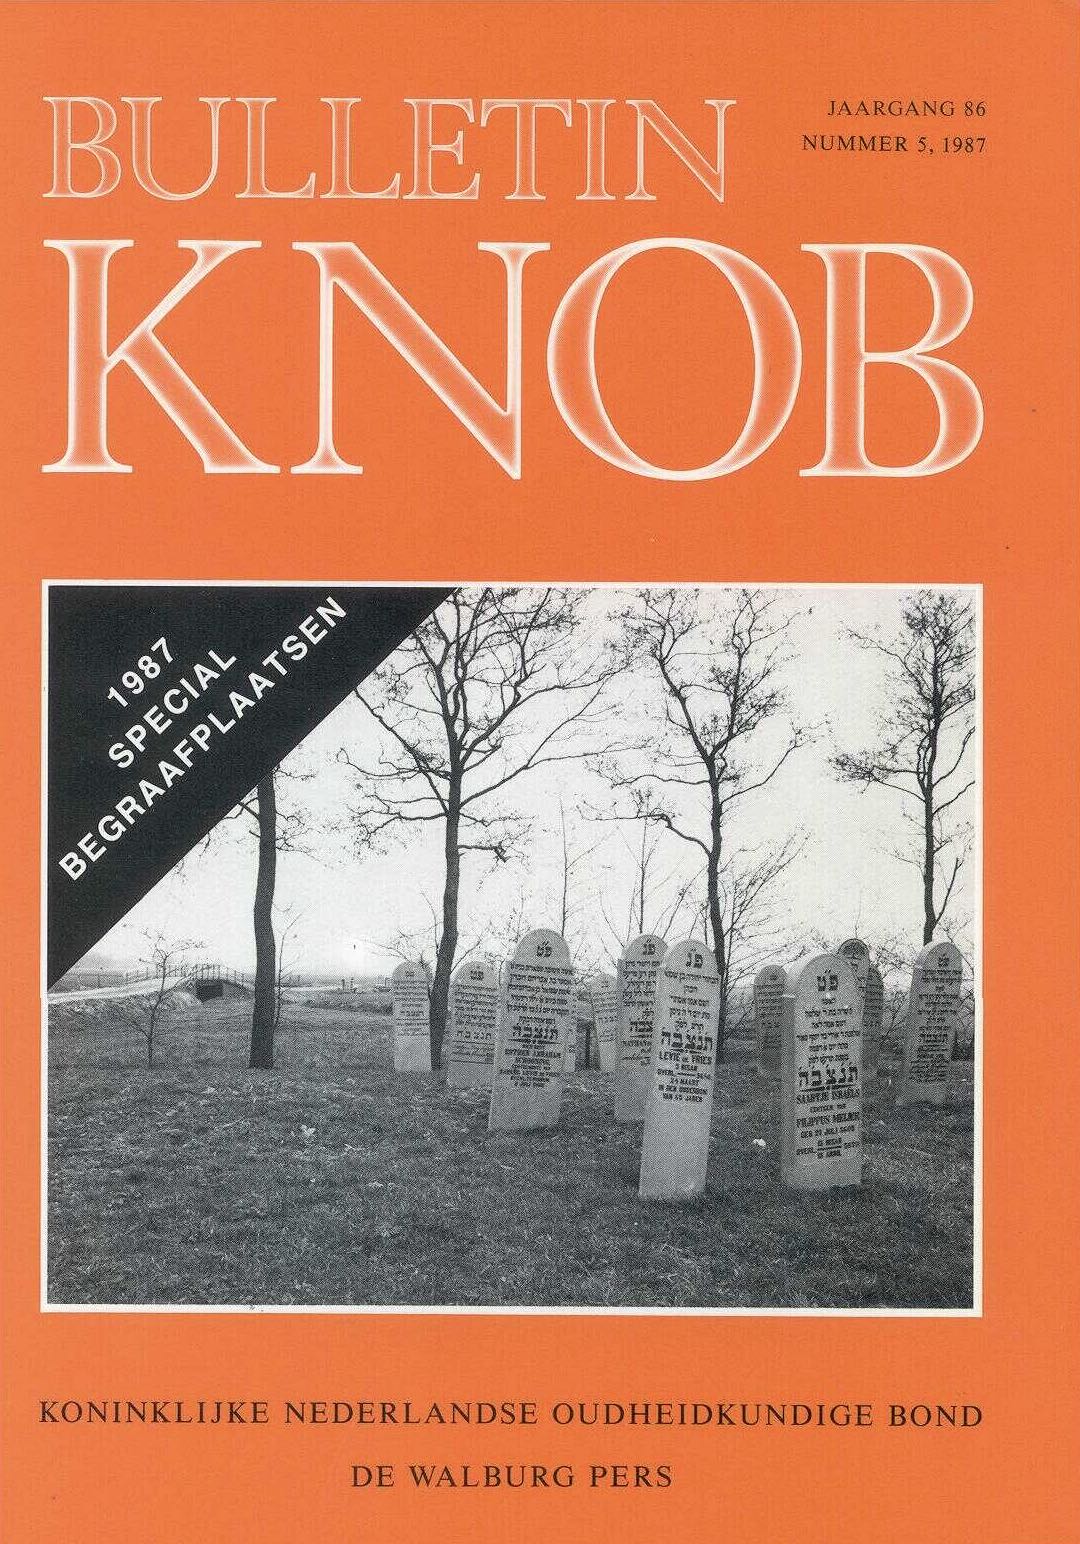 						View Bulletin KNOB 86 (1987) 5
					